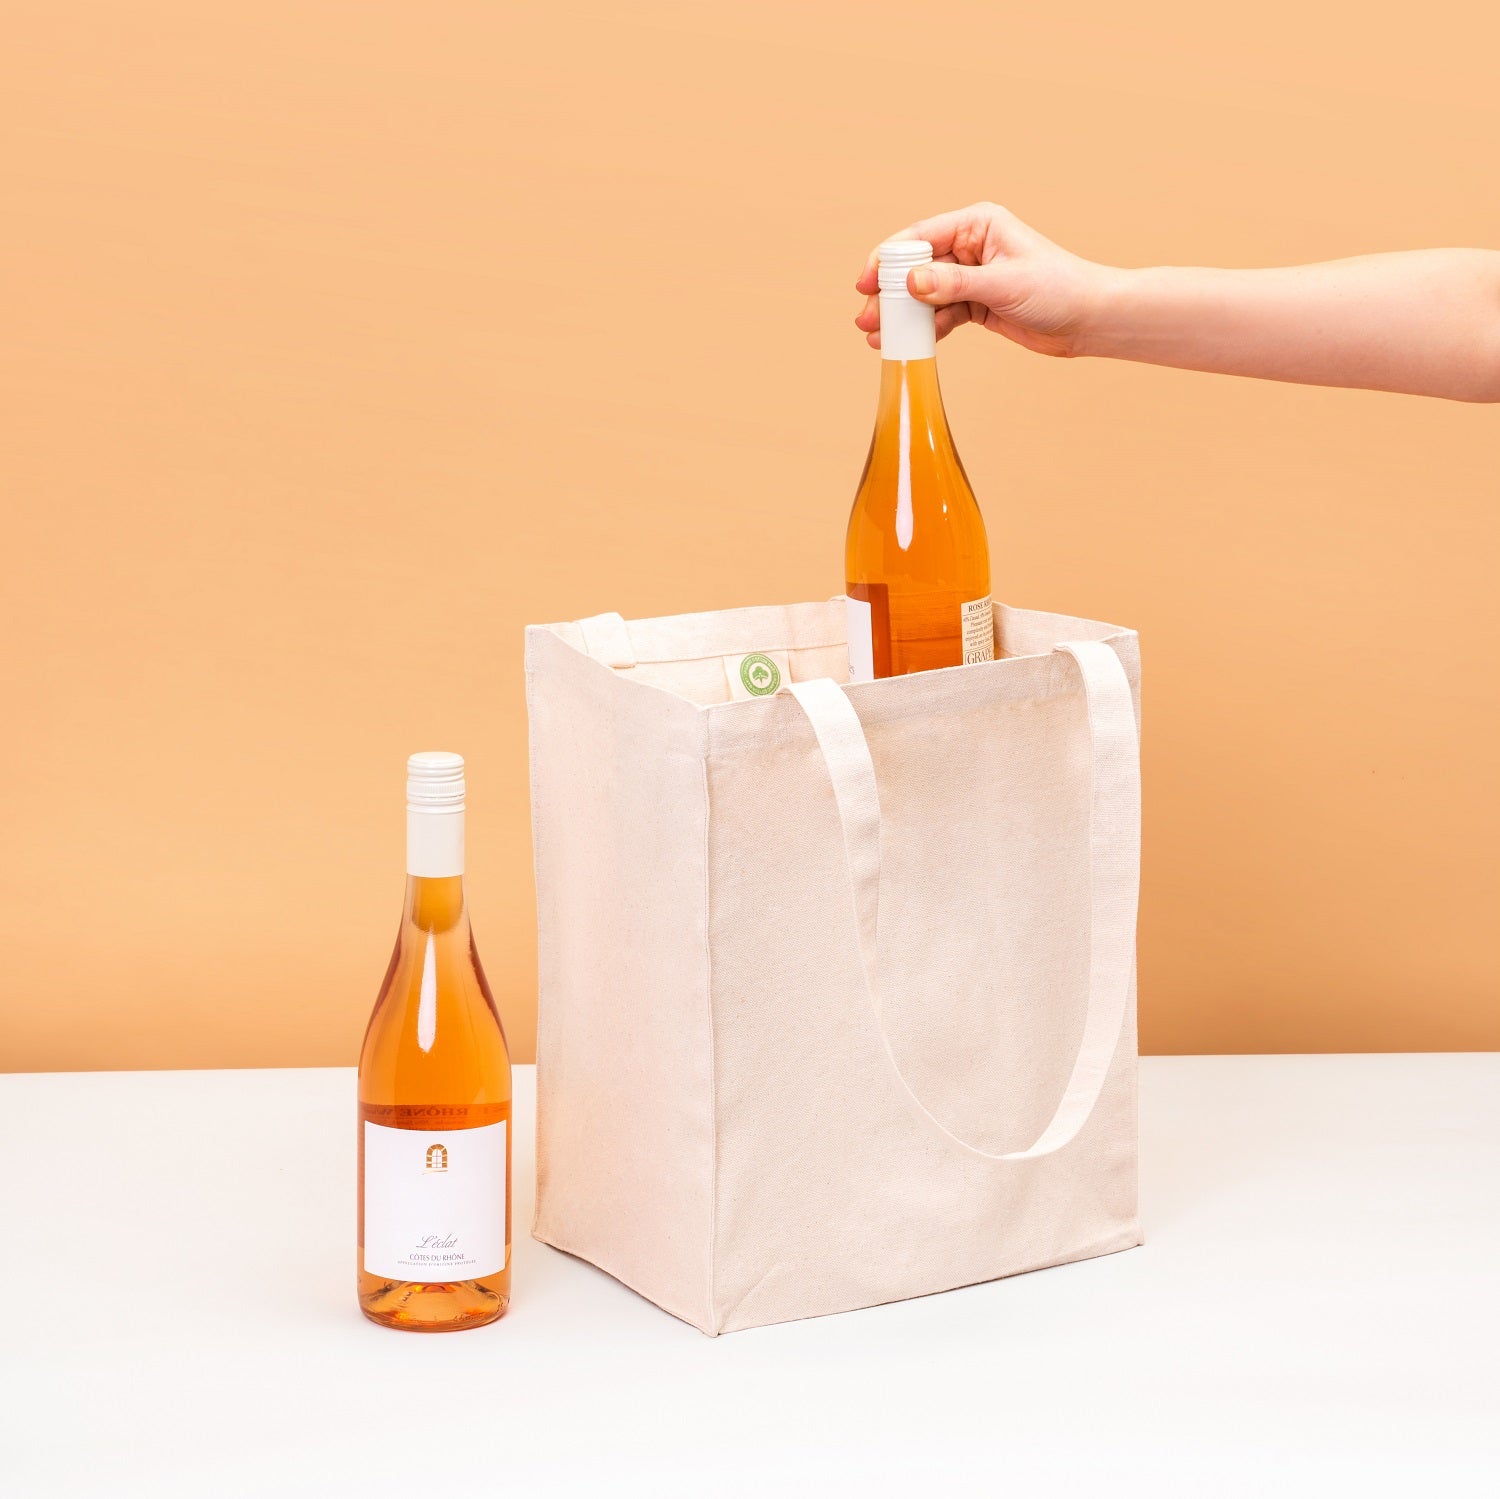 GREENSHEEP 6 Bottle Wine Carrier Bag, Reusable Wine Bottle Tote Bag,  Portable Wine Travel Bag with Handle for Picnic, Camping, Travel, Wine  Tasting